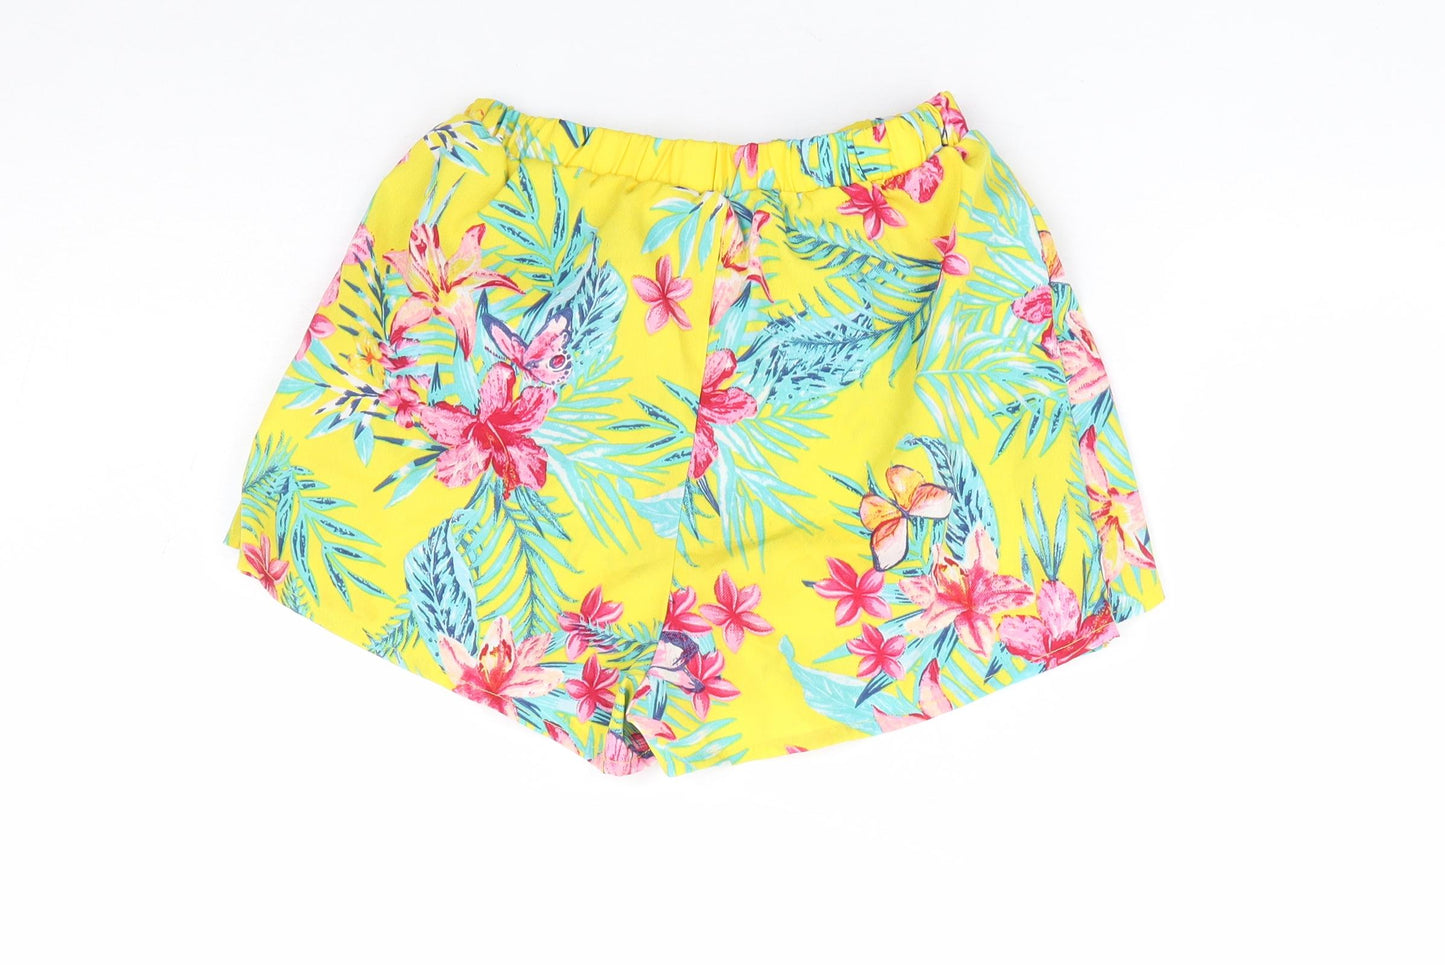 Primark Girls Multicoloured Geometric 100% Polyester Hot Pants Shorts Size 9-10 Years Regular